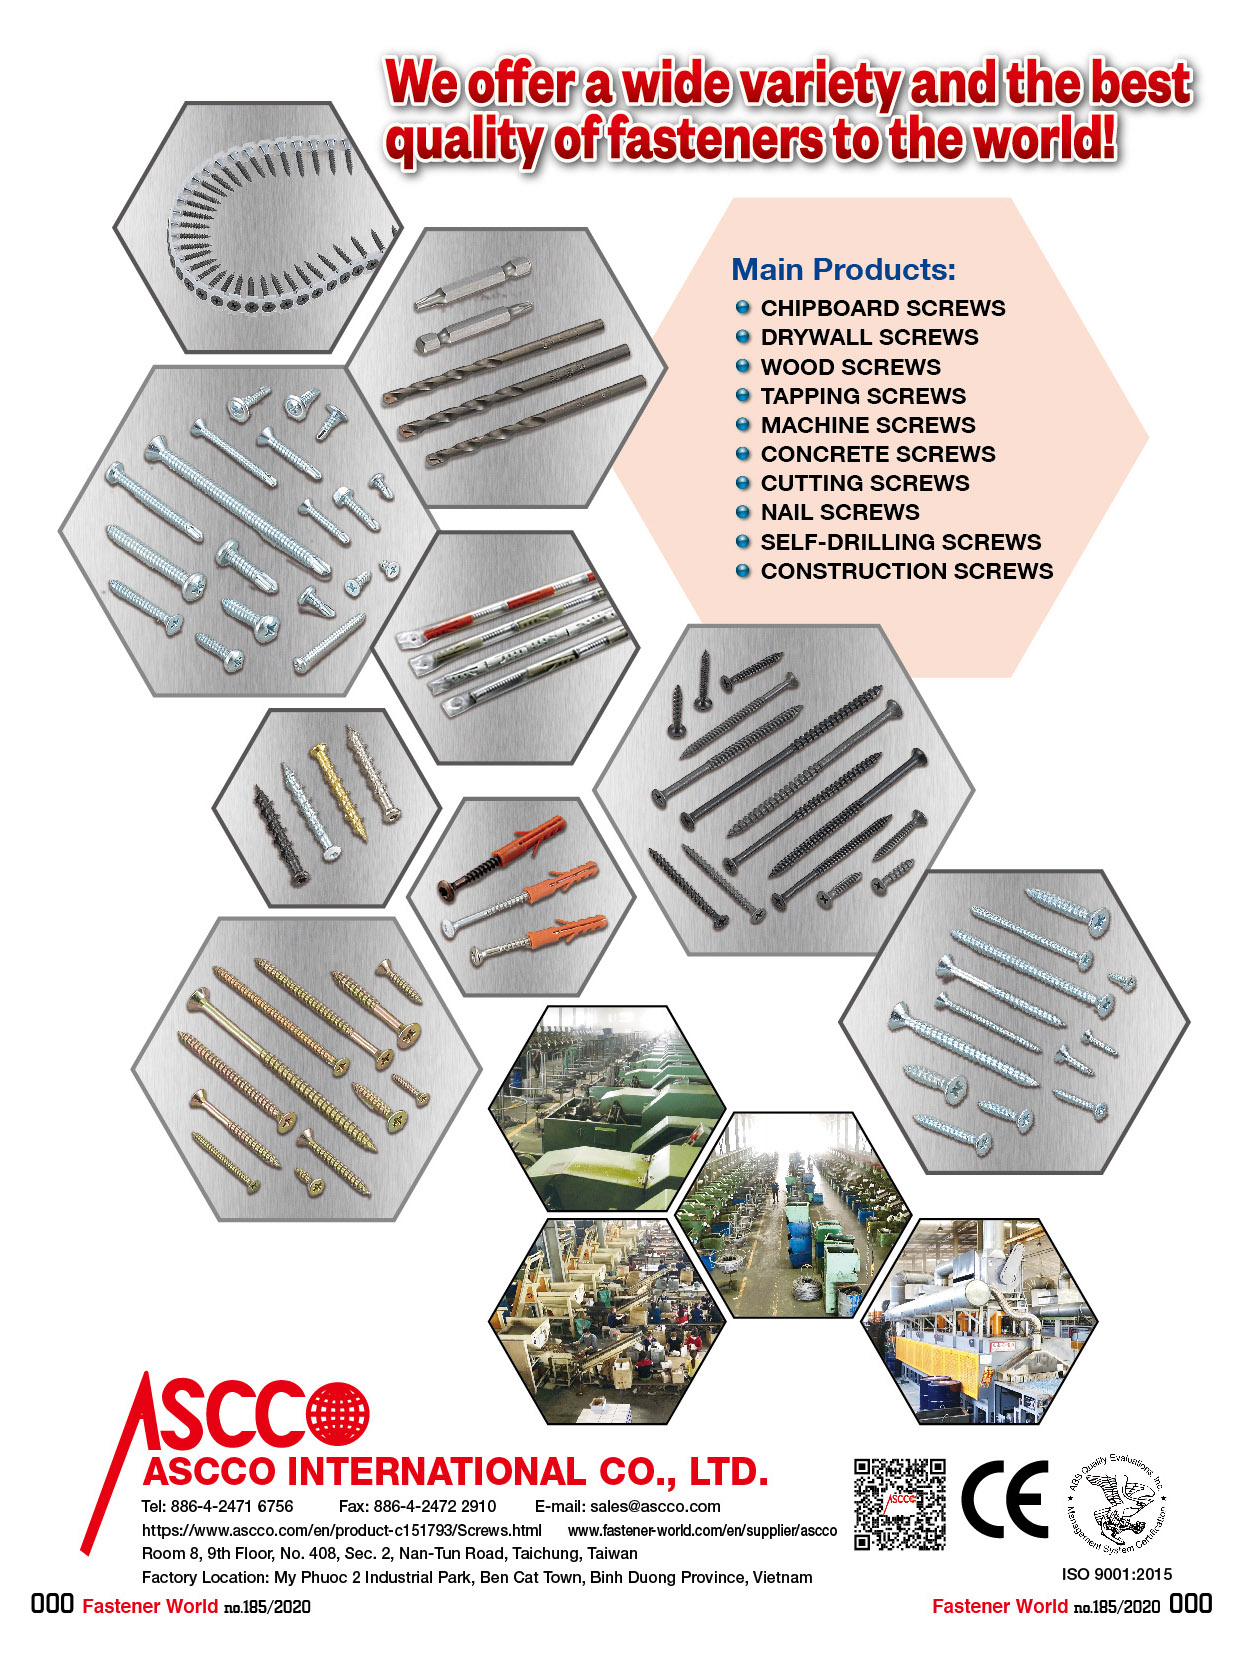 ASCCO INTERNATIONAL CO., LTD. , Chipboard Screws, Drywall Screws, Wood Screws, Tapping Screws, Machine Screws, Concrete Screws, Self-Drilling Screws, Cutting Screws, Nail Screws, Construction Screws , Chipboard Screws